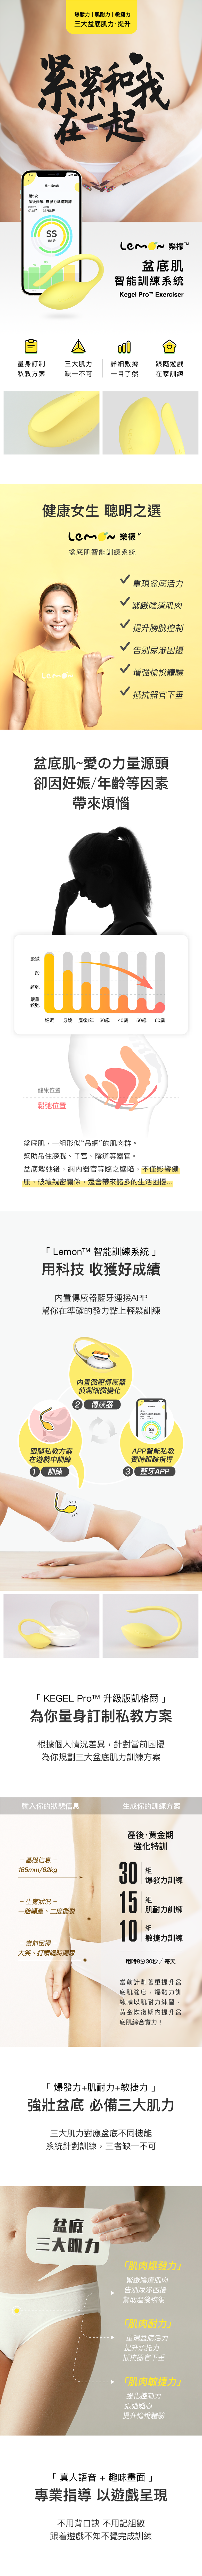 LEXY ® 香港成人用品網購平台